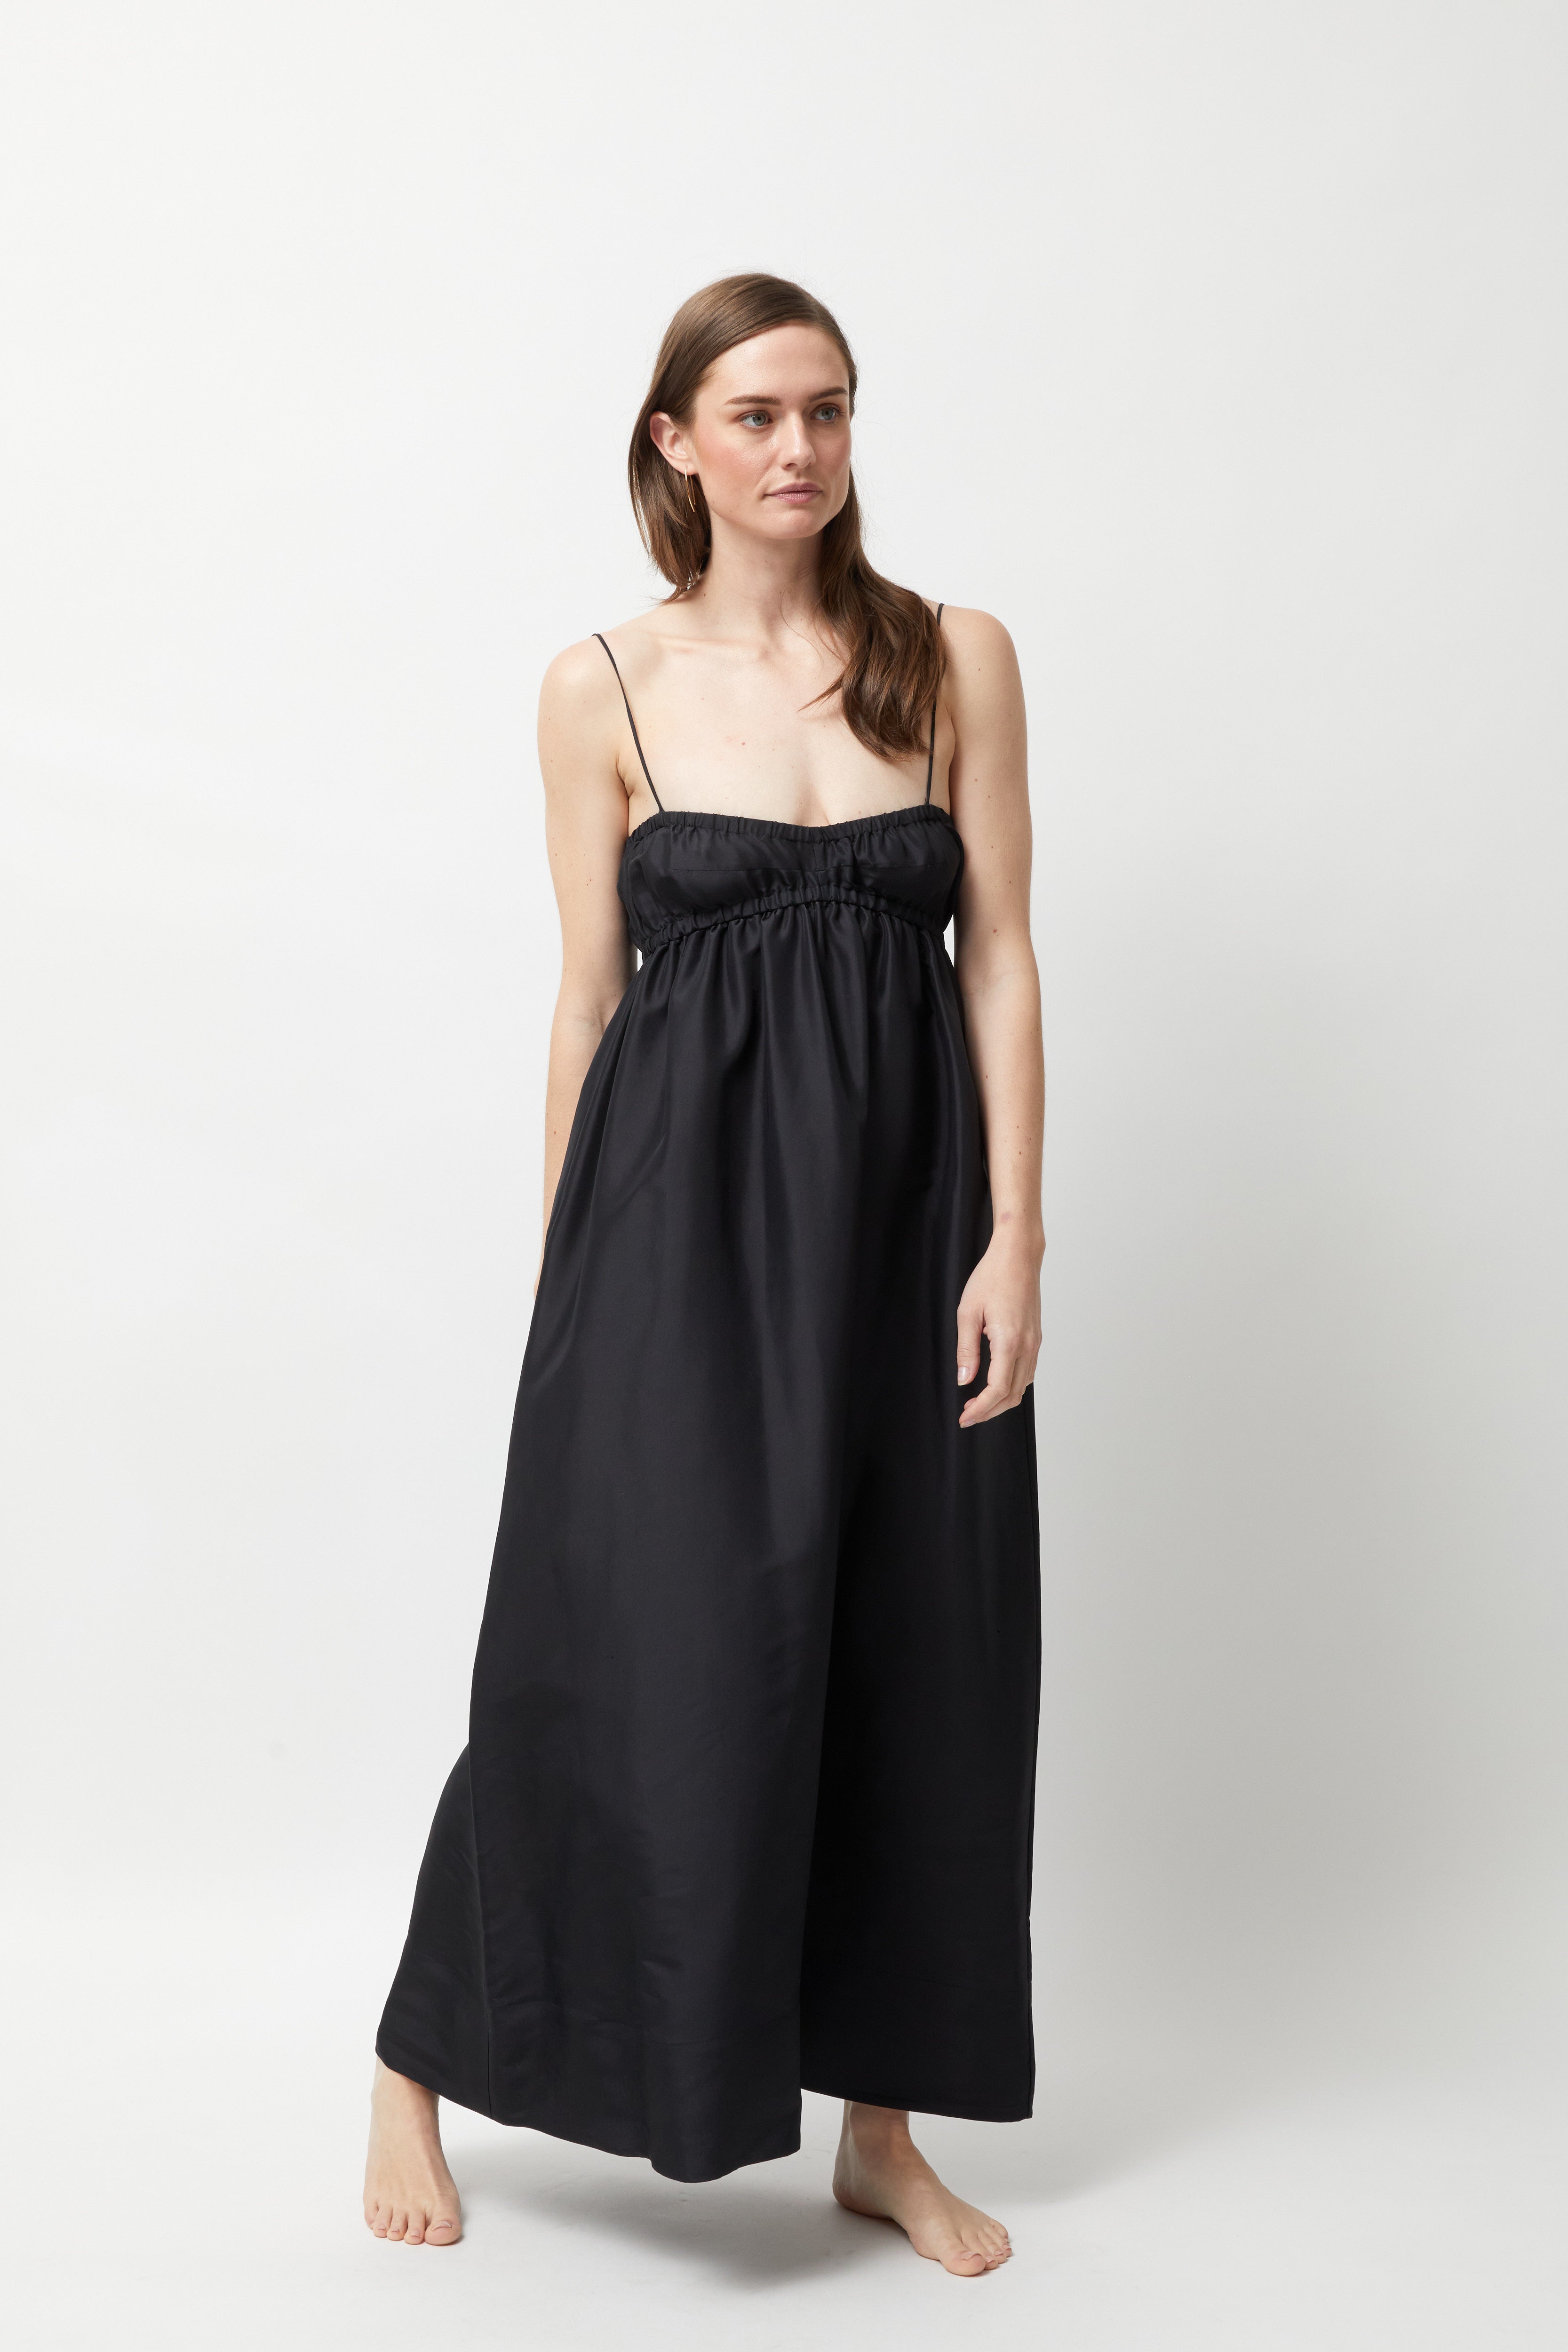 Belle Bandeau Elastic Dress - Black Silk Taffeta